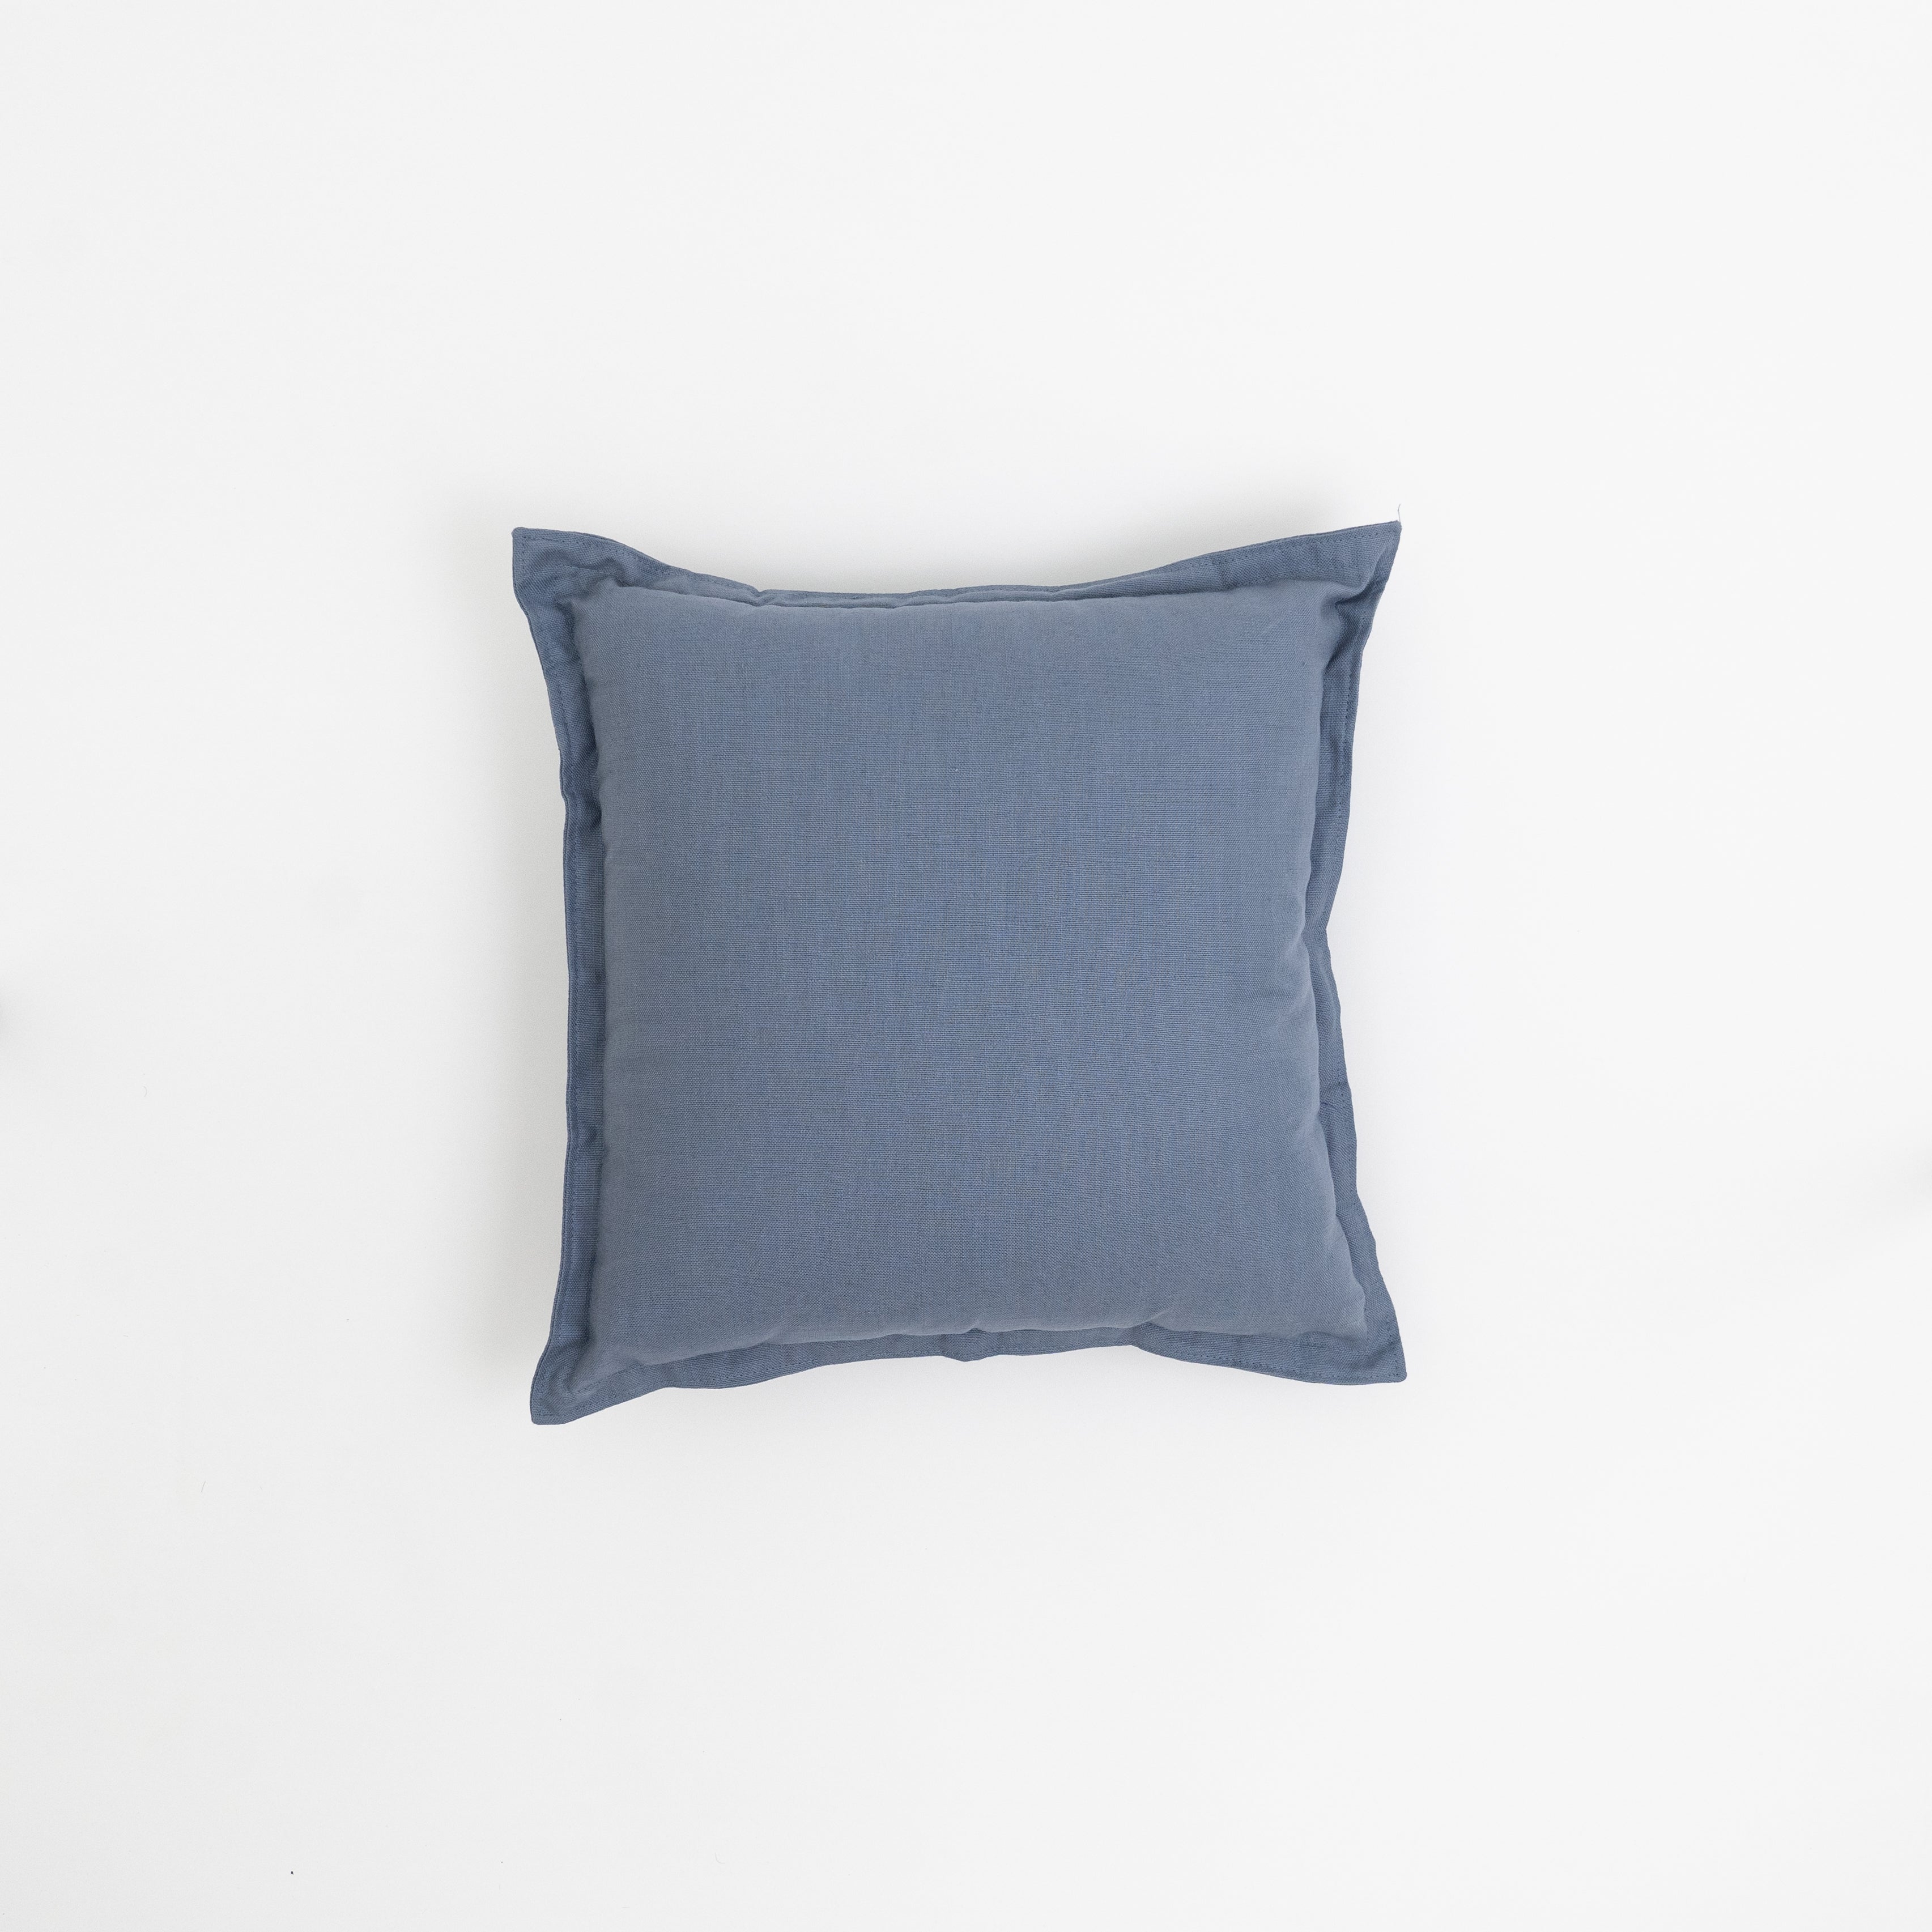 Cushion Cover Blue 45 x45cm  - WS Living - UAE - Cushions Wood and steel Furnitures - Dubai